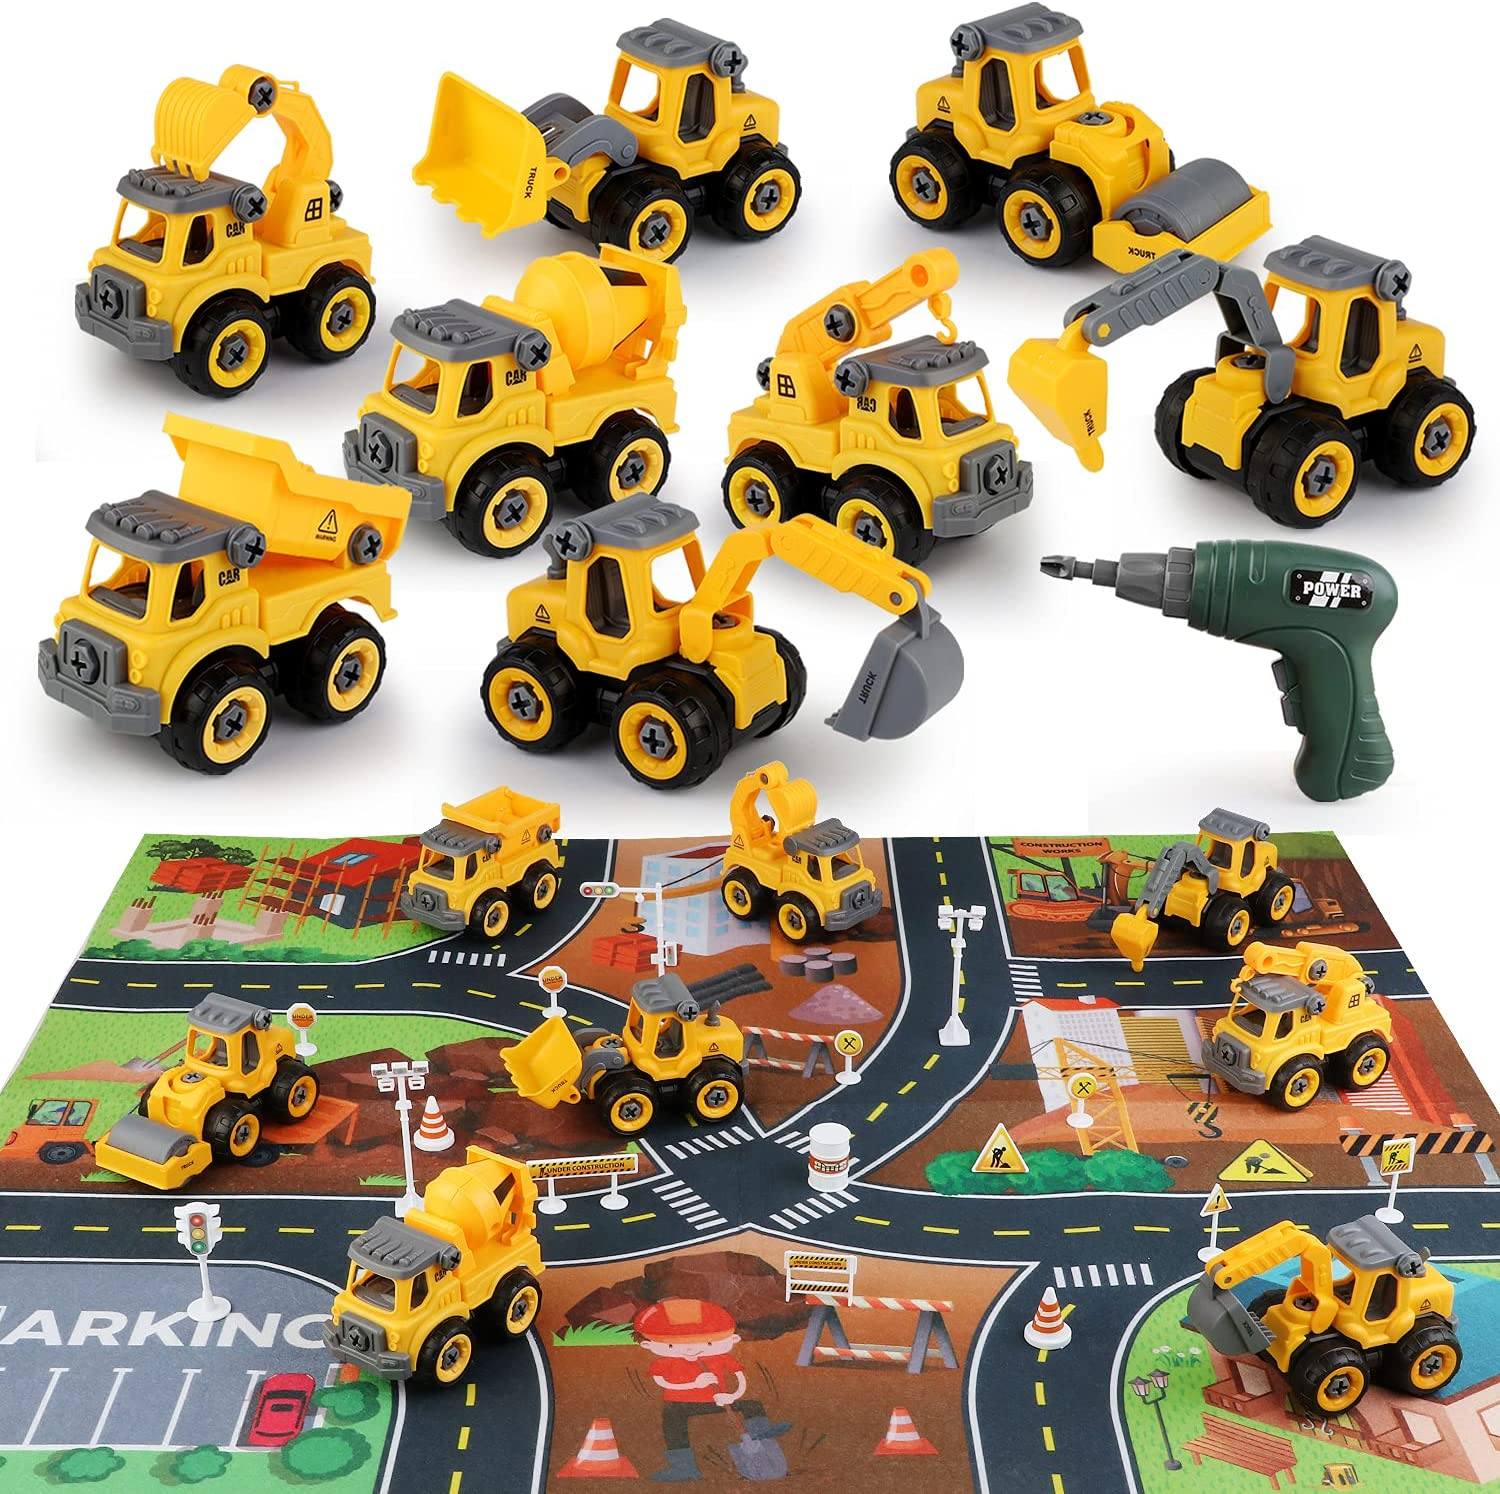 Kids Assembly Take Apart Car Construction Toy Kit Tool for Children Girls Boys 